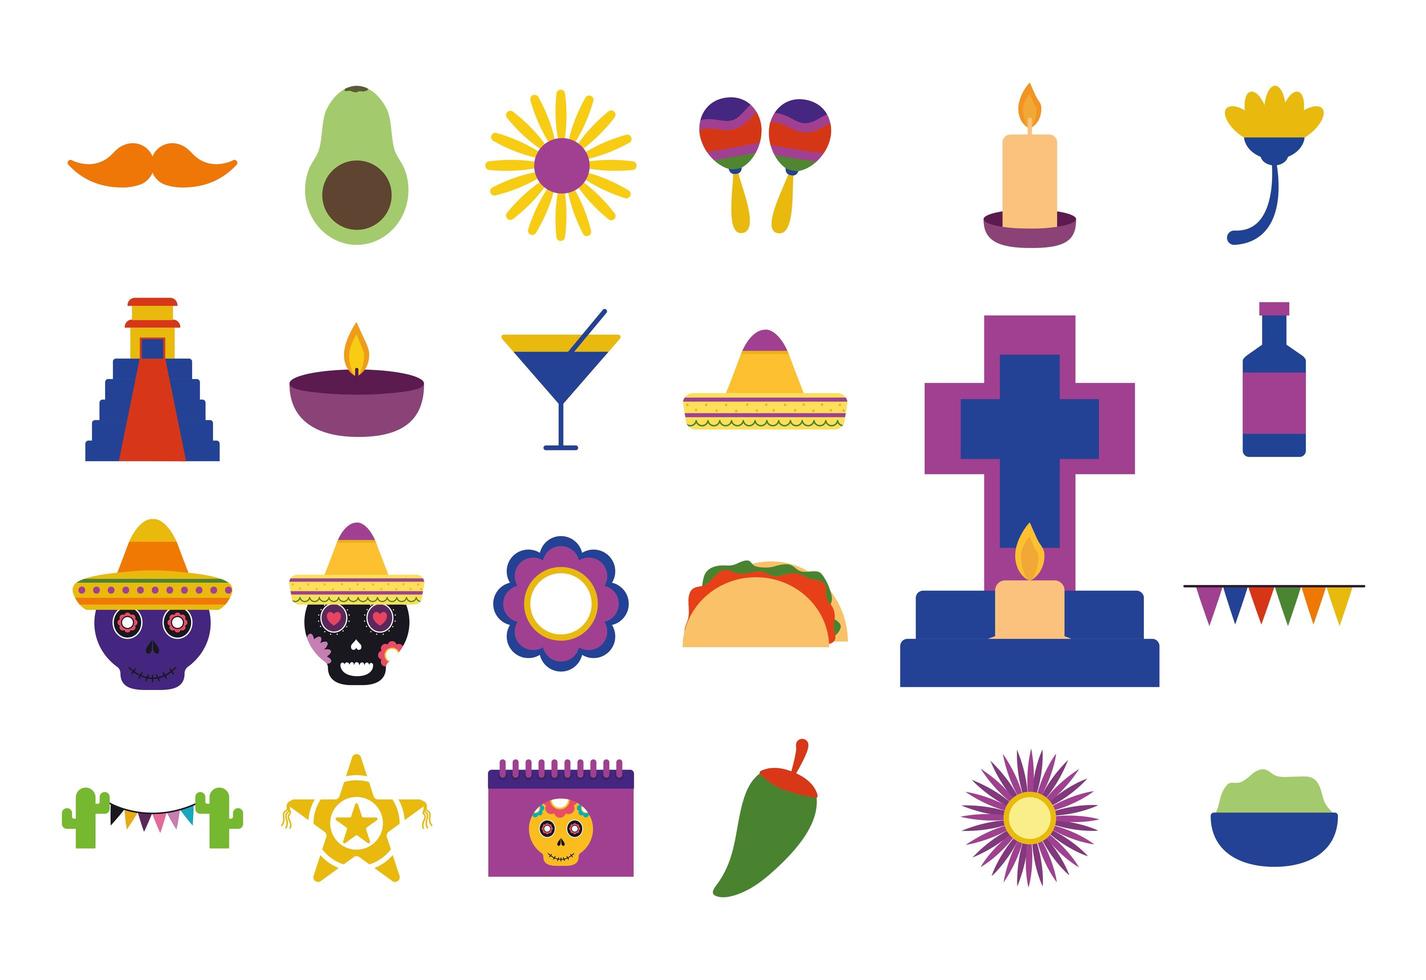 set di icone di cultura messicana vettore